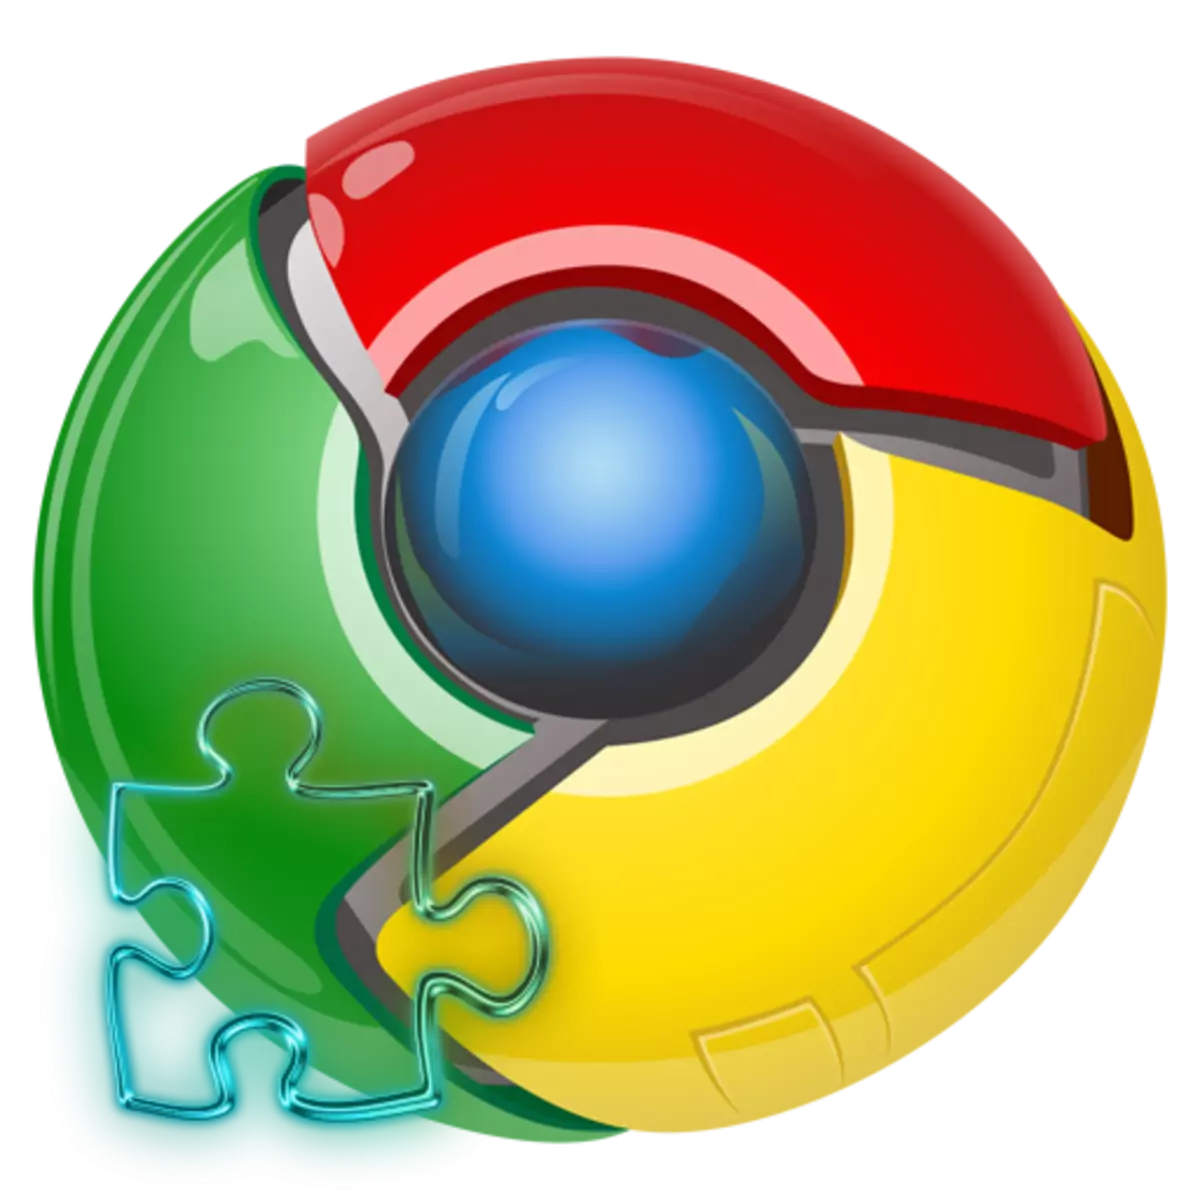 Sinusuri ang mga update sa Chrome Components Pepper Flash